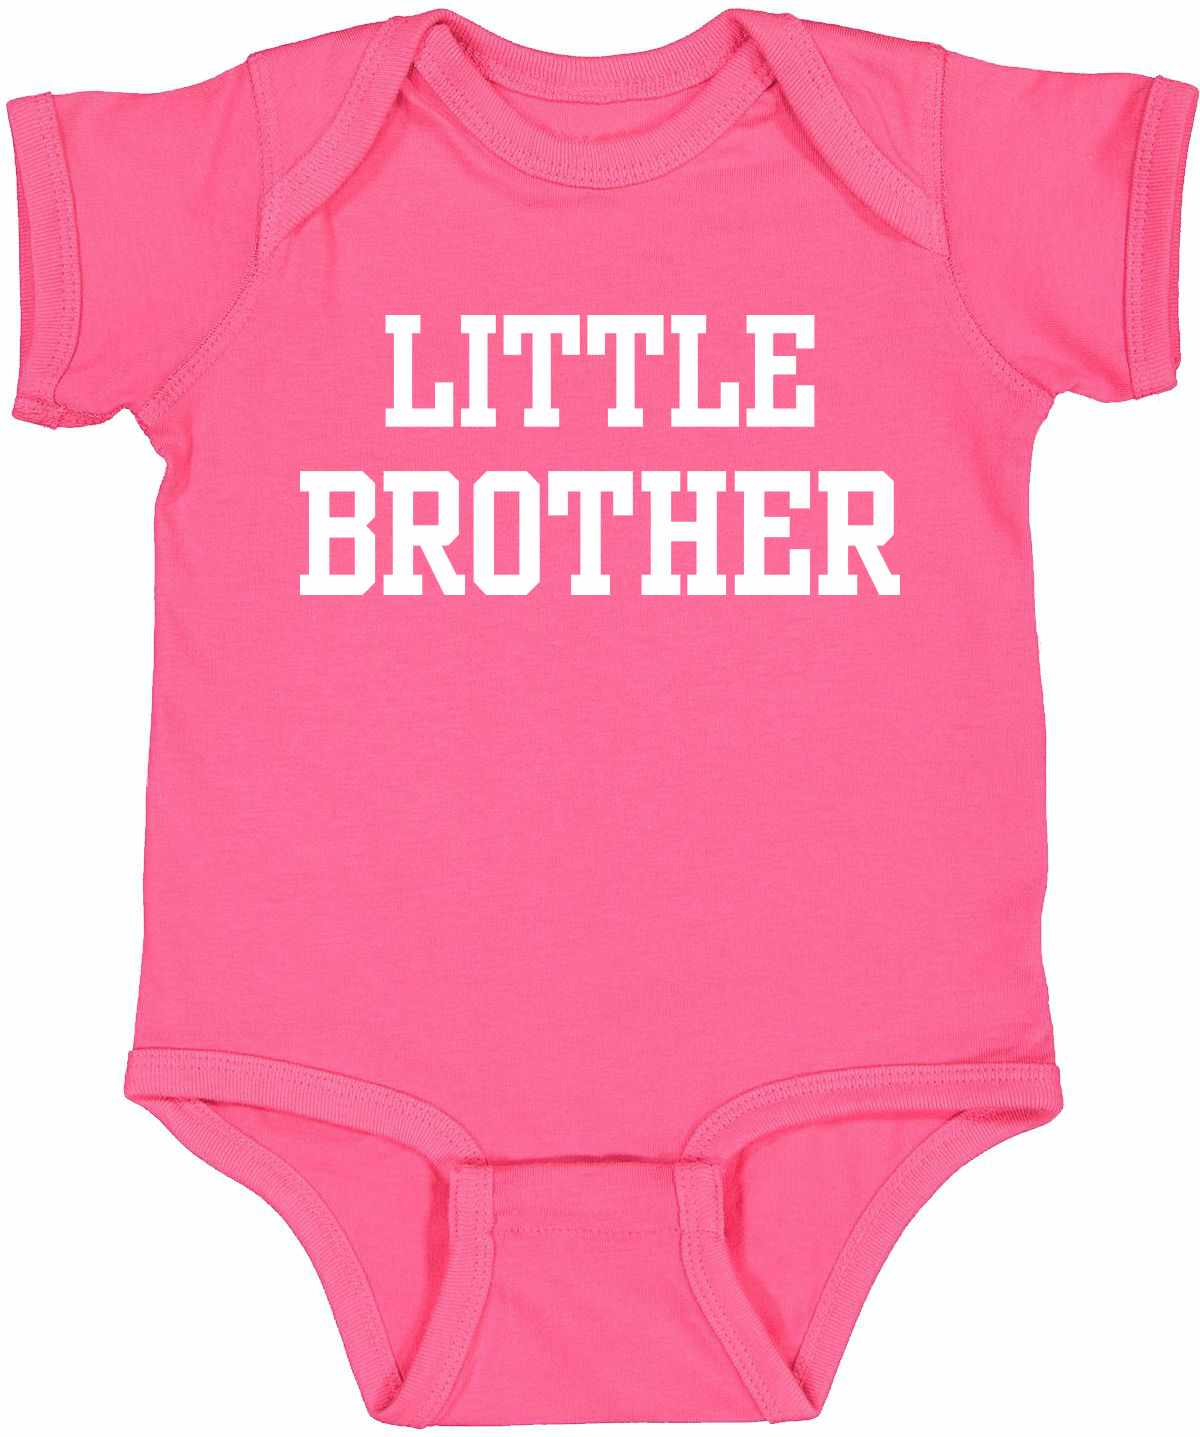 LITTLE BROTHER Infant BodySuit (#1111-10)